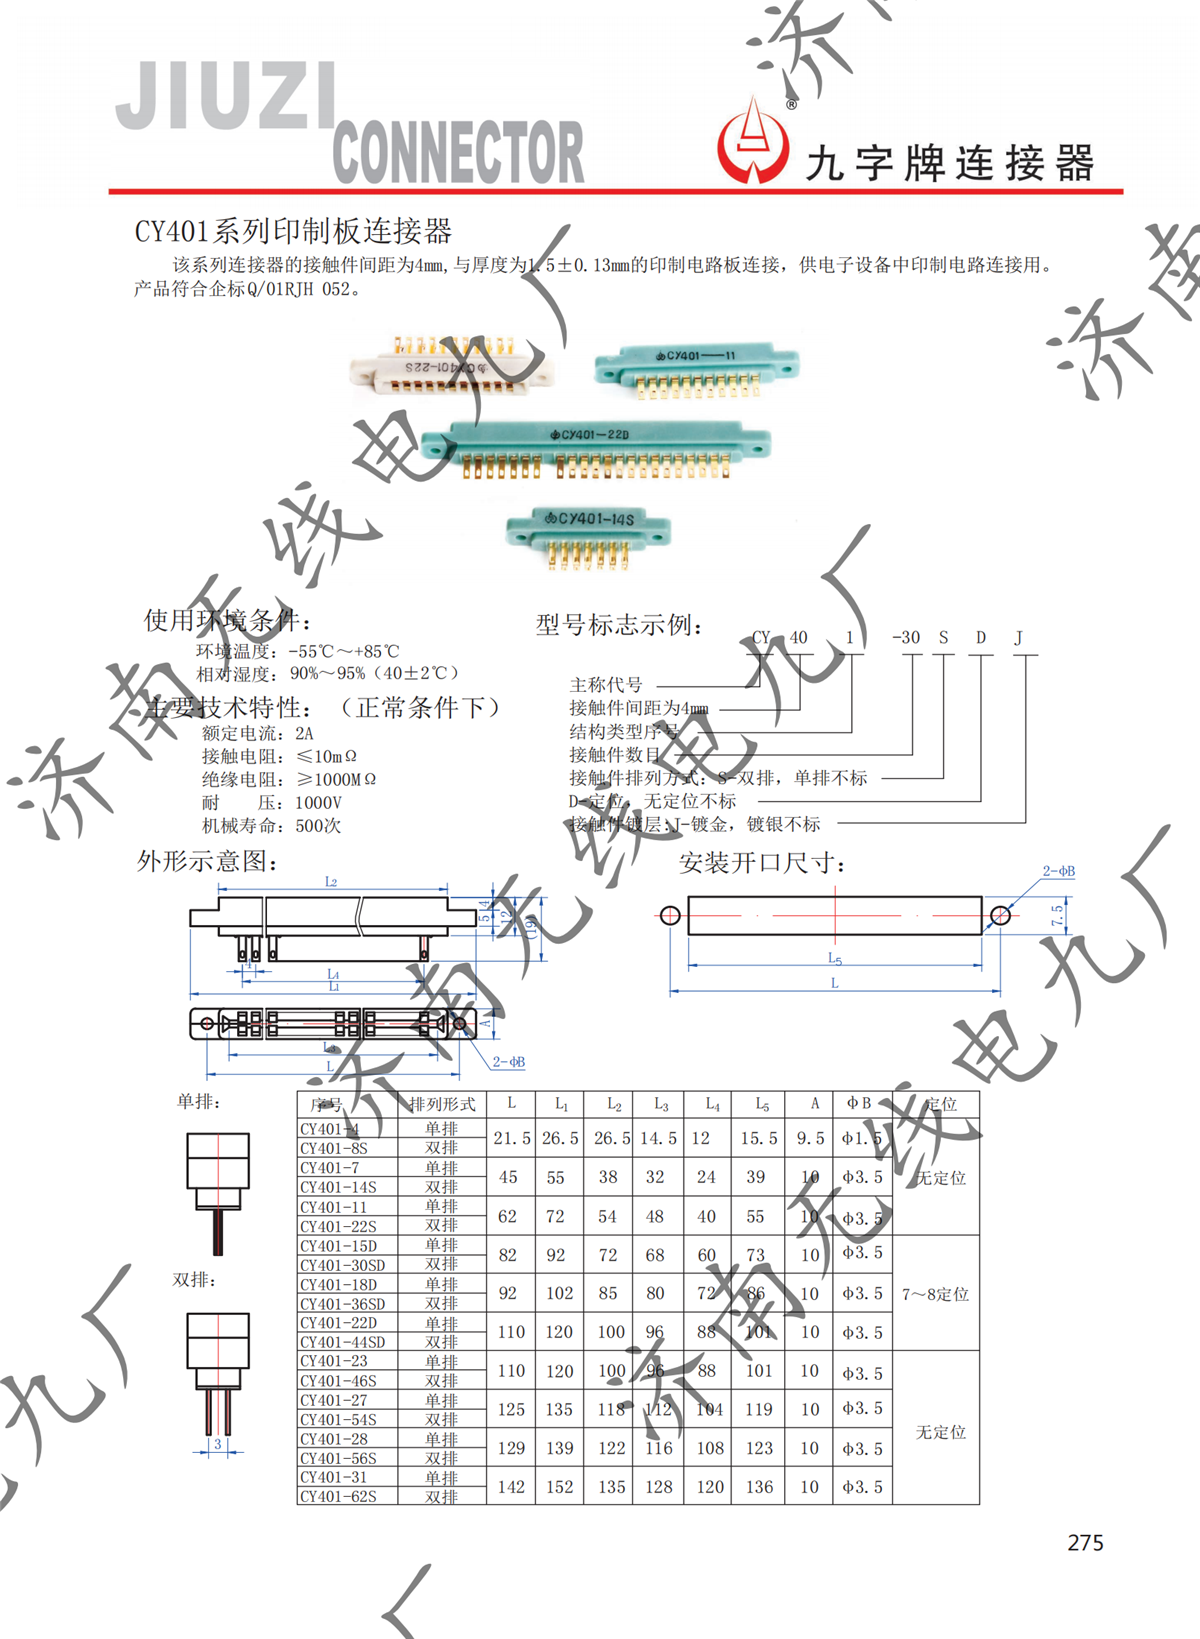 CY401系列印制板连接器_00.png